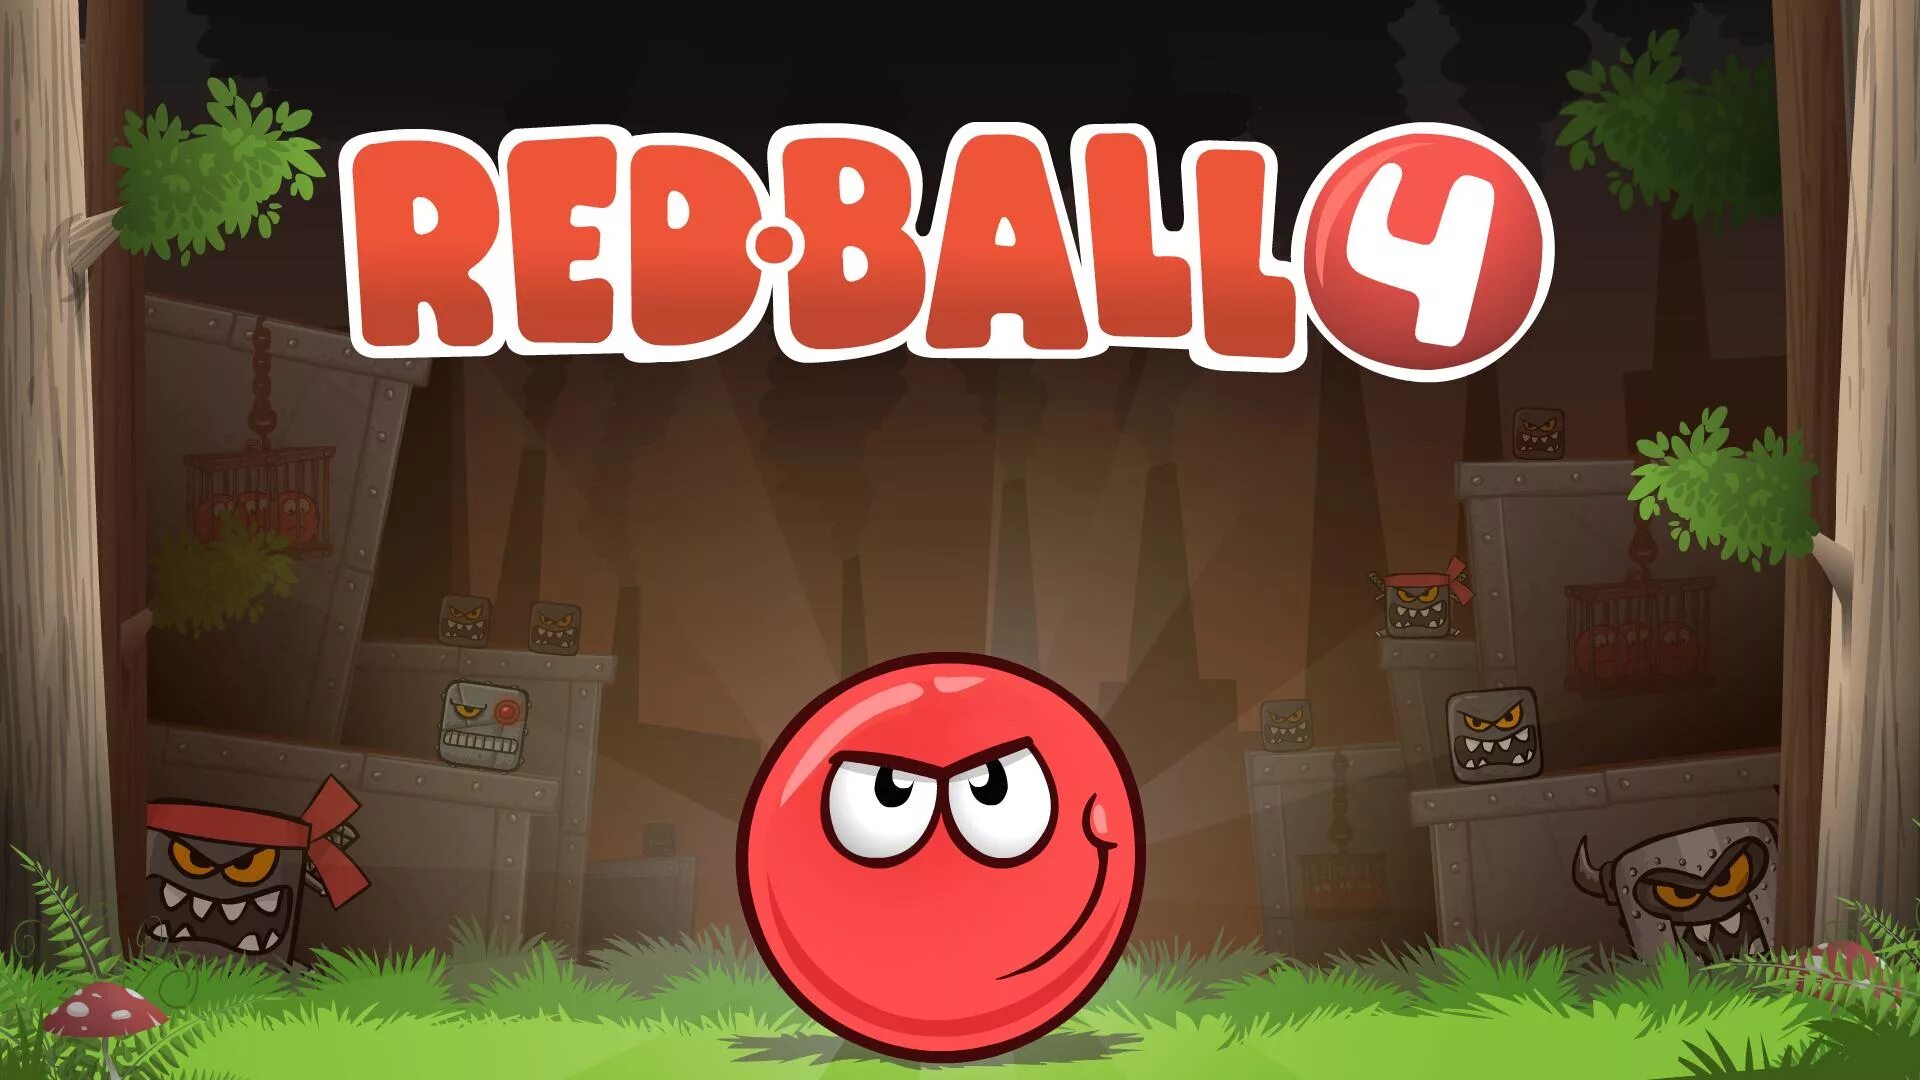 Ред болл игра. Игра Red Ball. Красный шарик Red Ball игра. Игра ред бол 4. Игра красный шар 4.